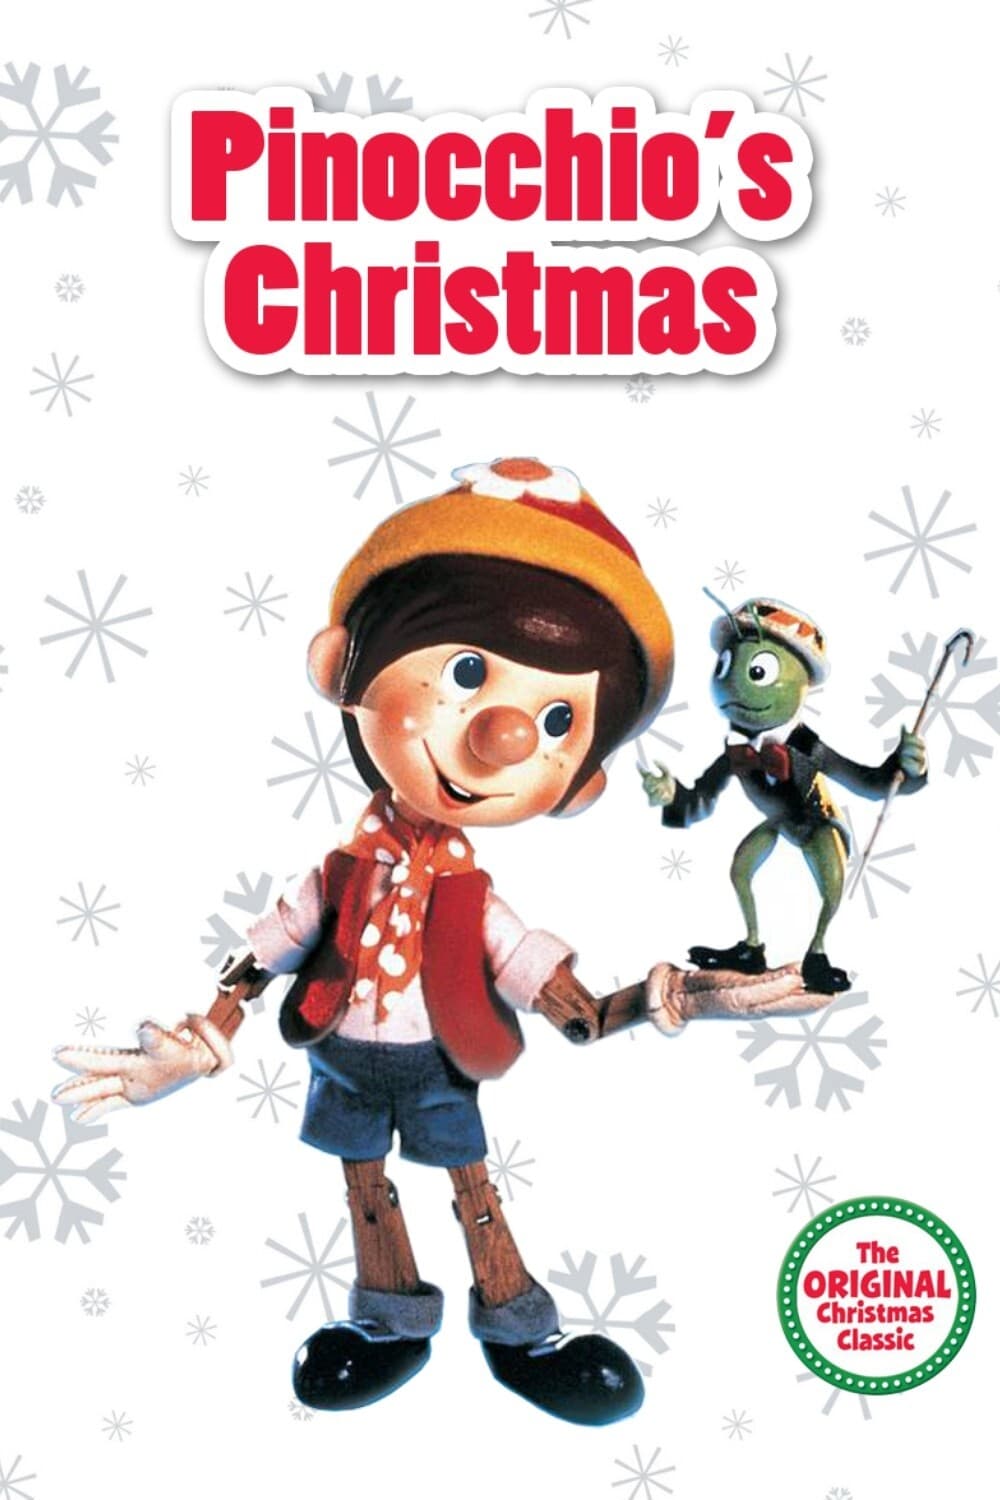 Pinocchio's Christmas (1980)